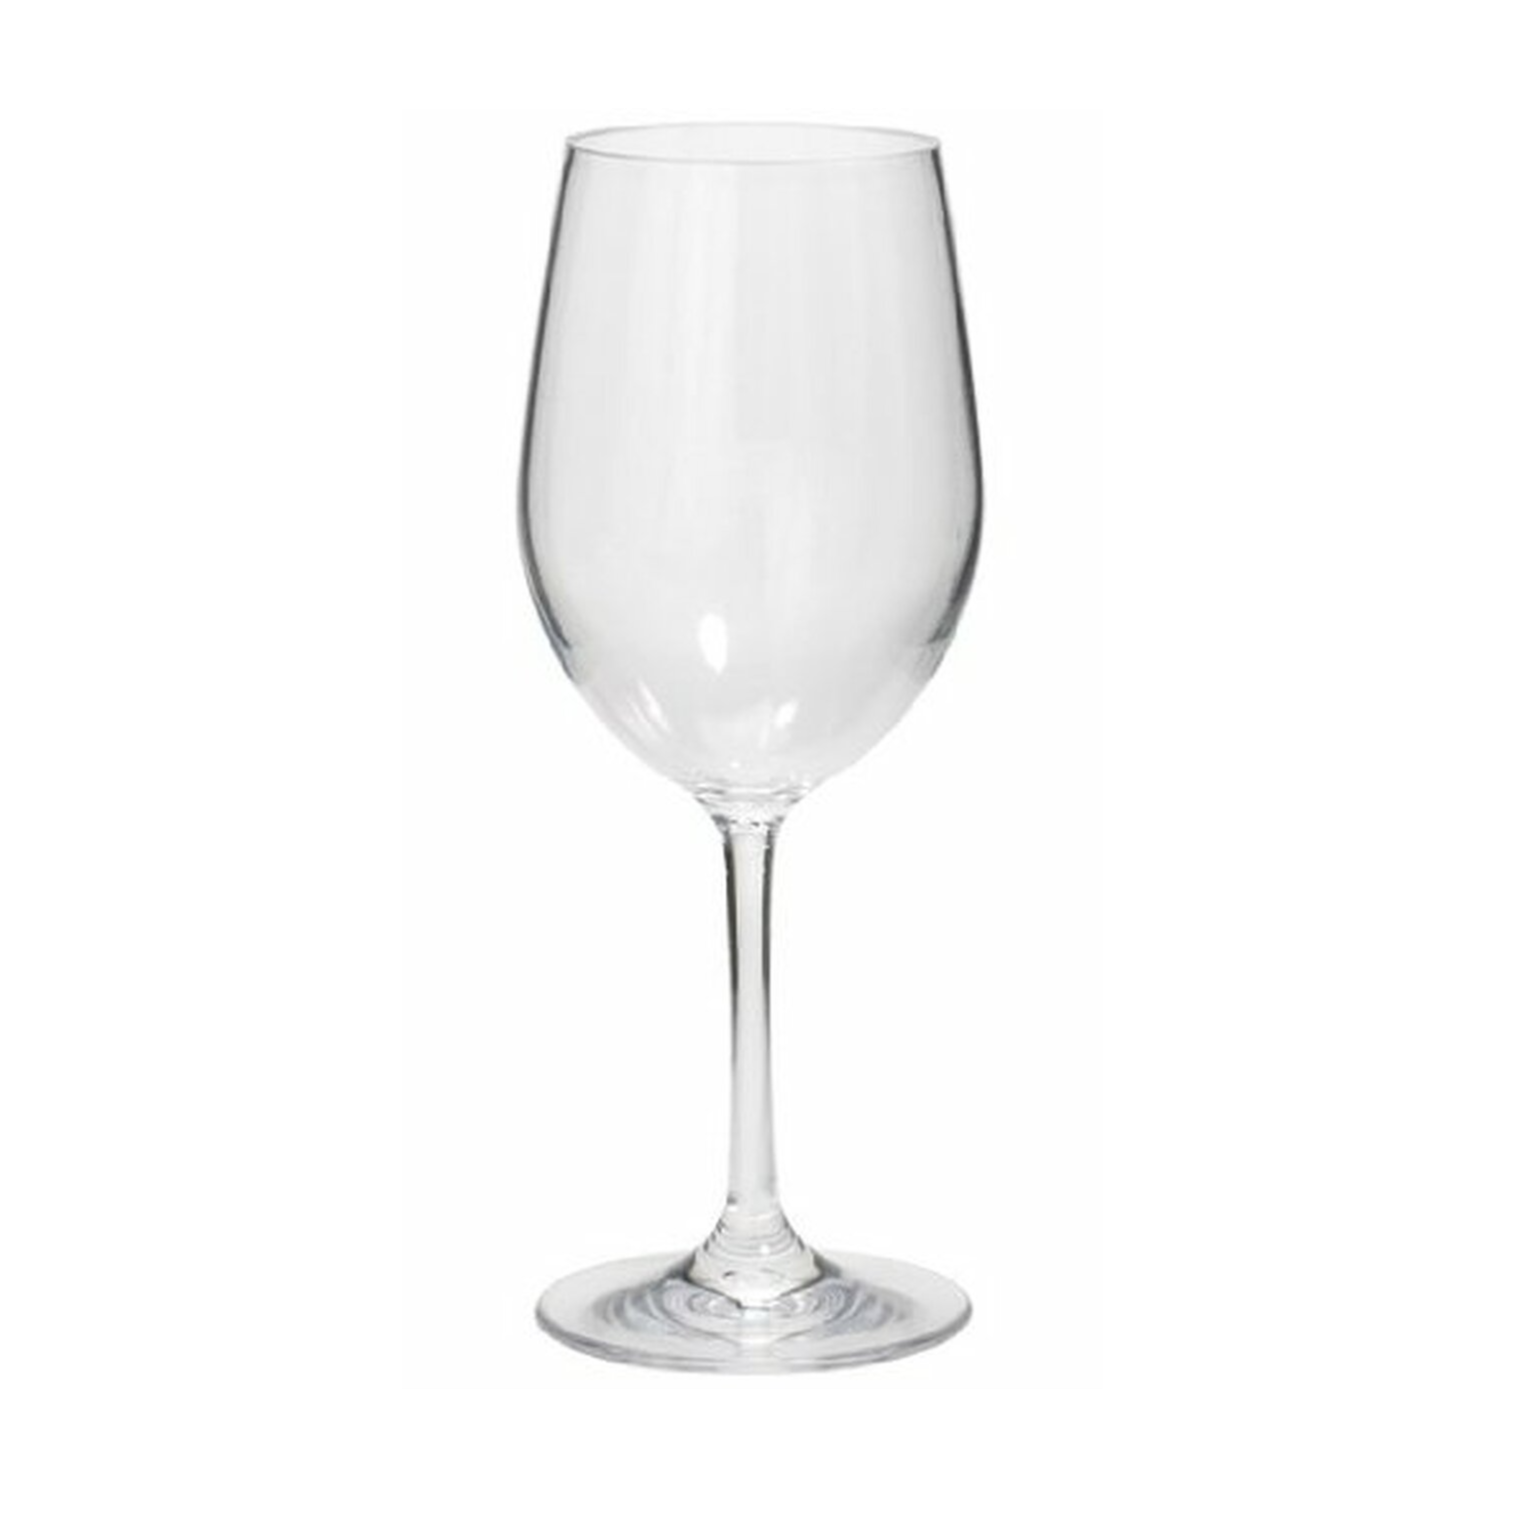 Merritt Designs Tritan Wine Glass